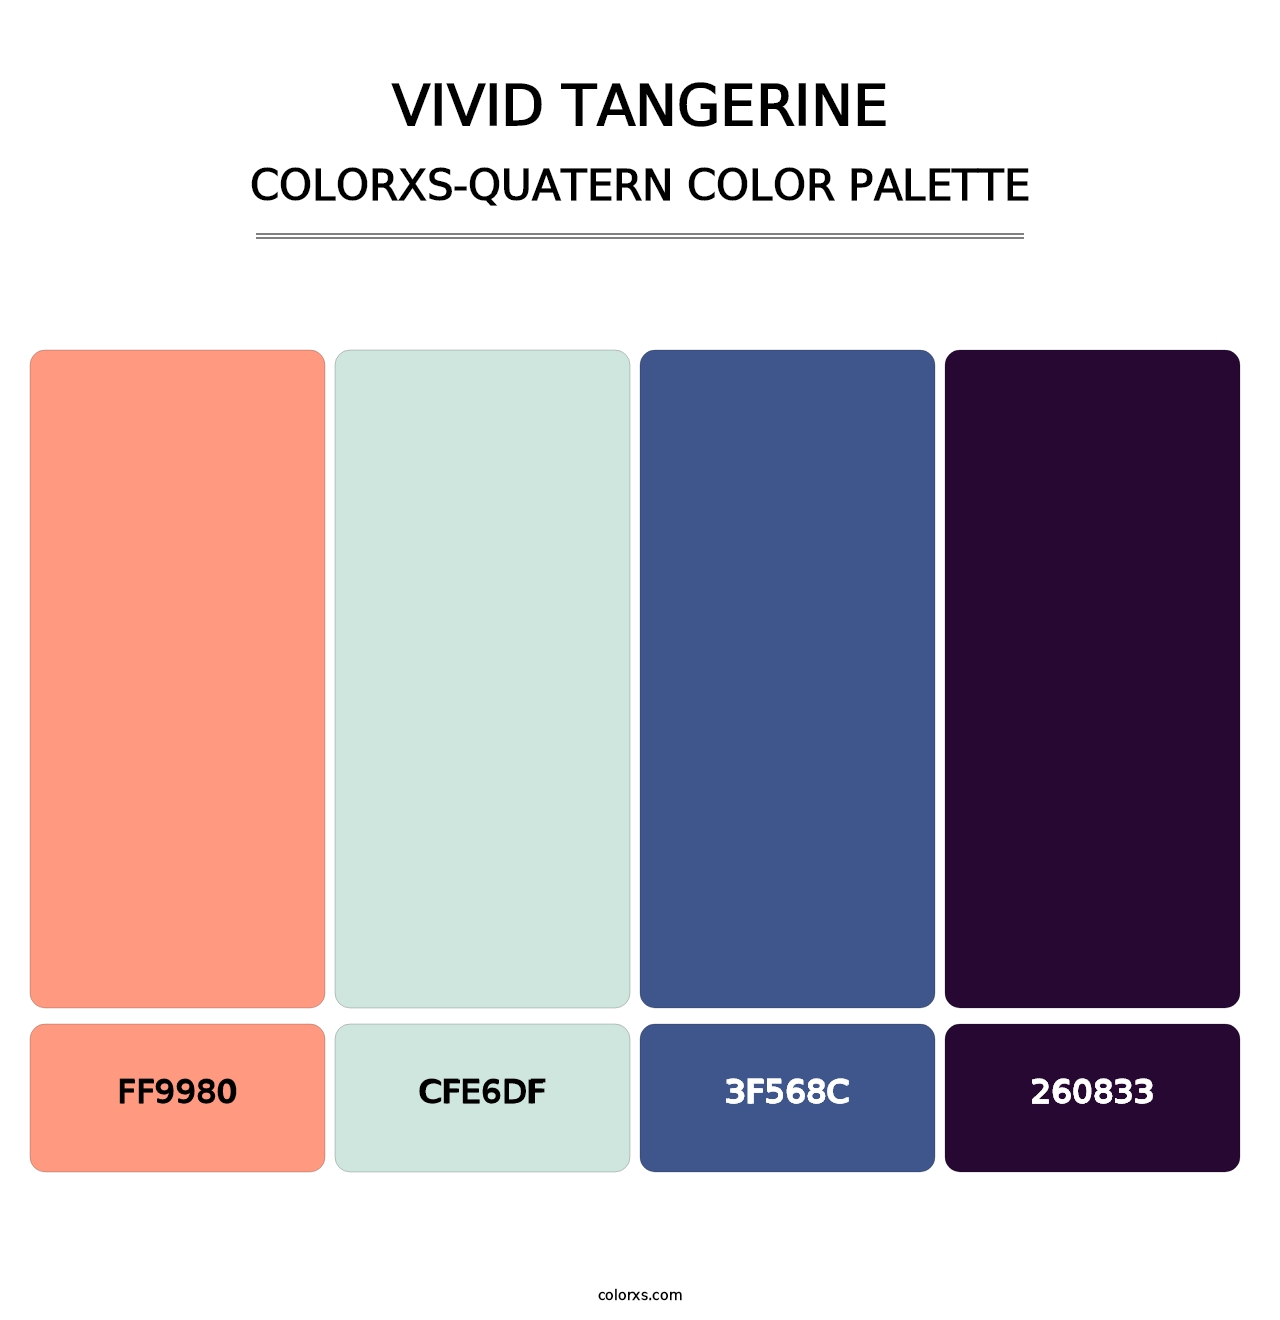 Vivid Tangerine - Colorxs Quatern Palette